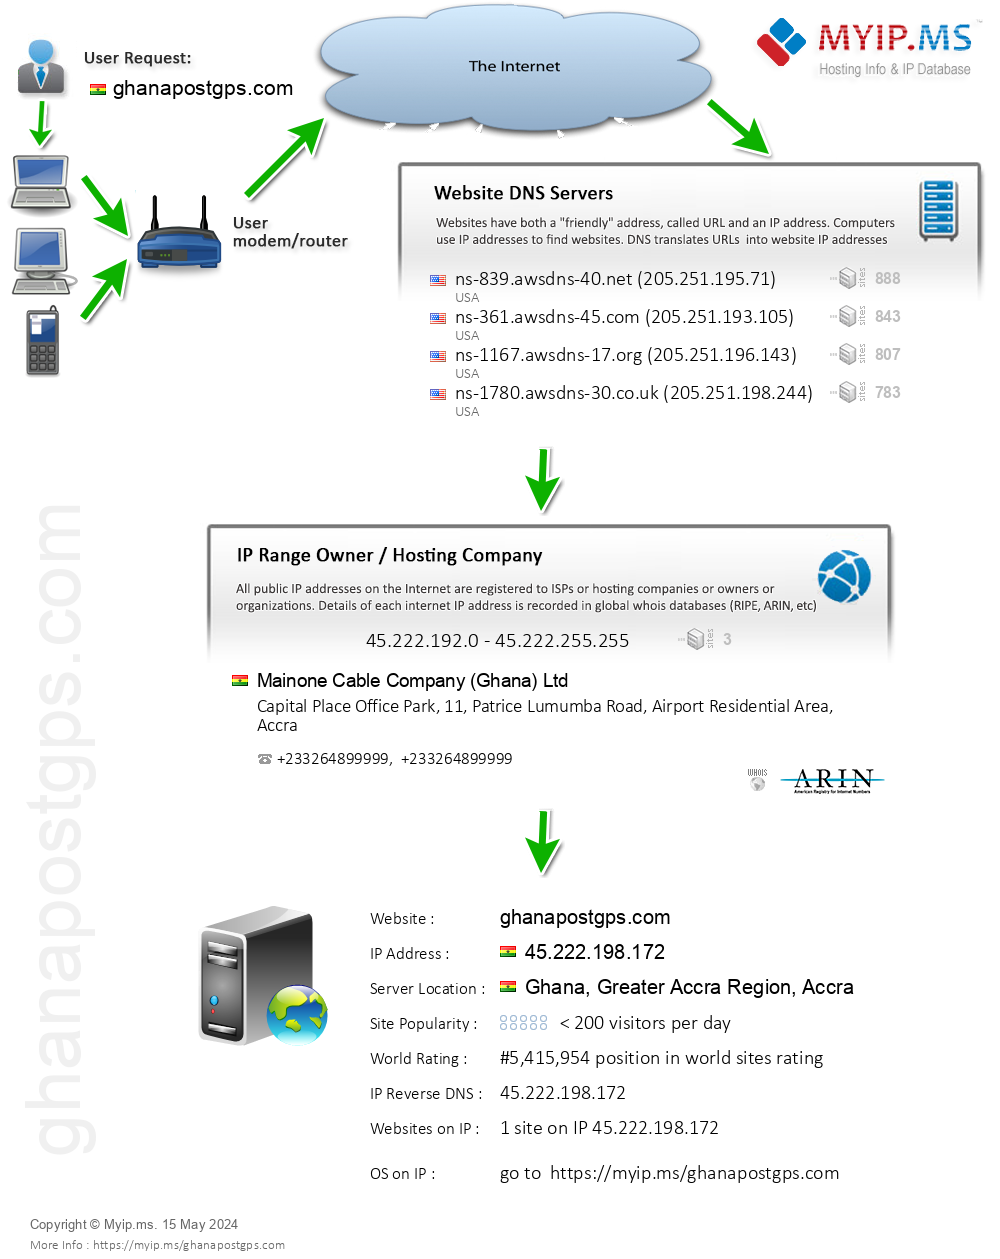 Ghanapostgps.com - Website Hosting Visual IP Diagram